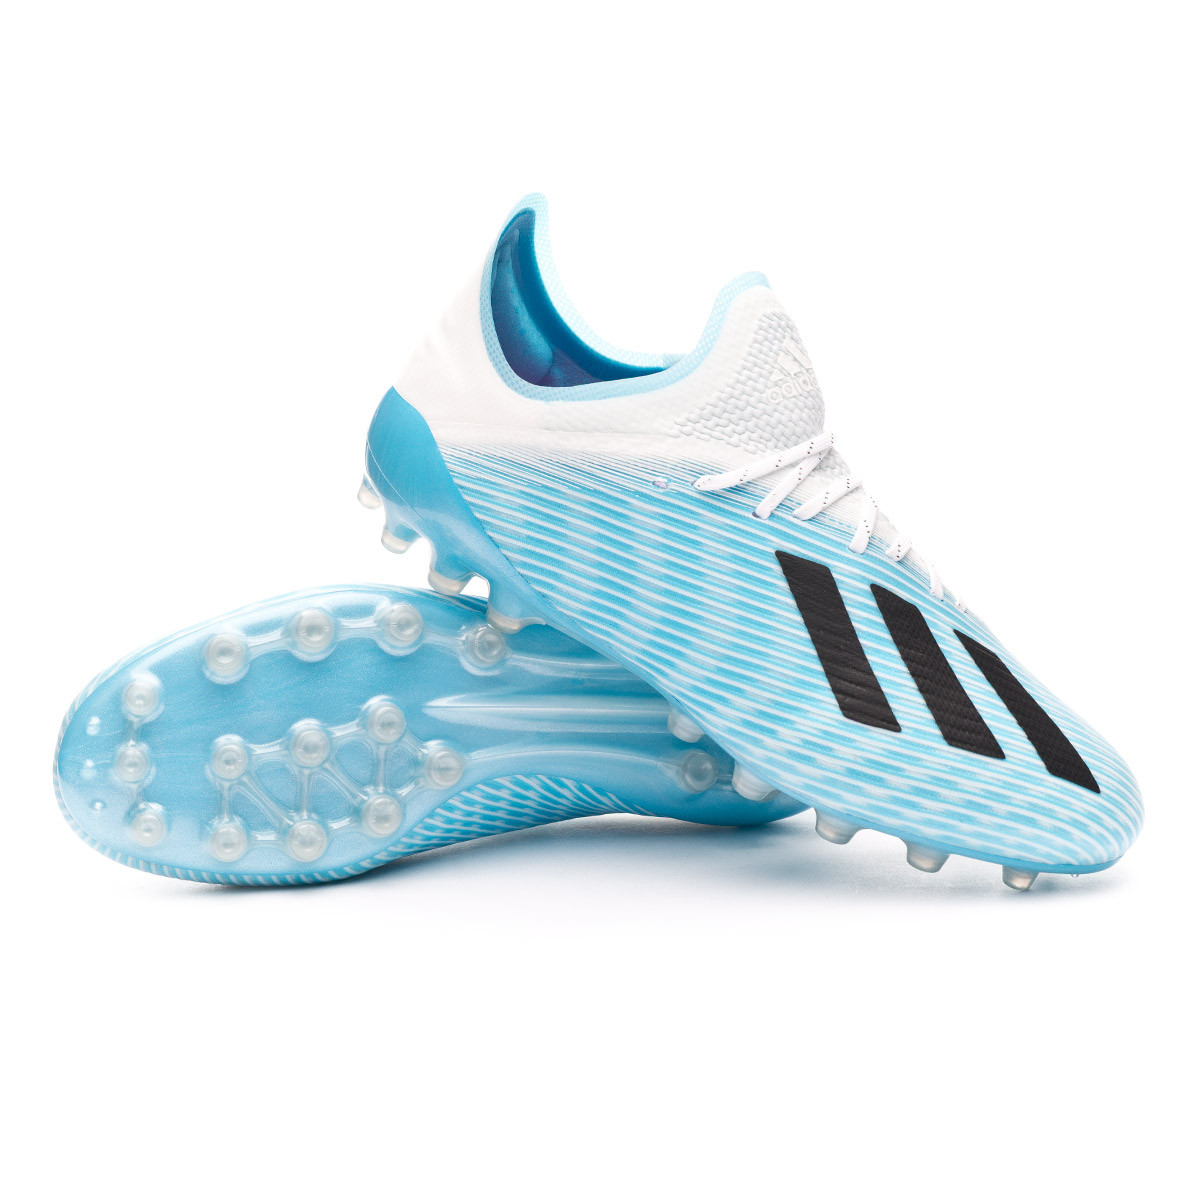 Football Boots adidas X 19.1 AG Bright 